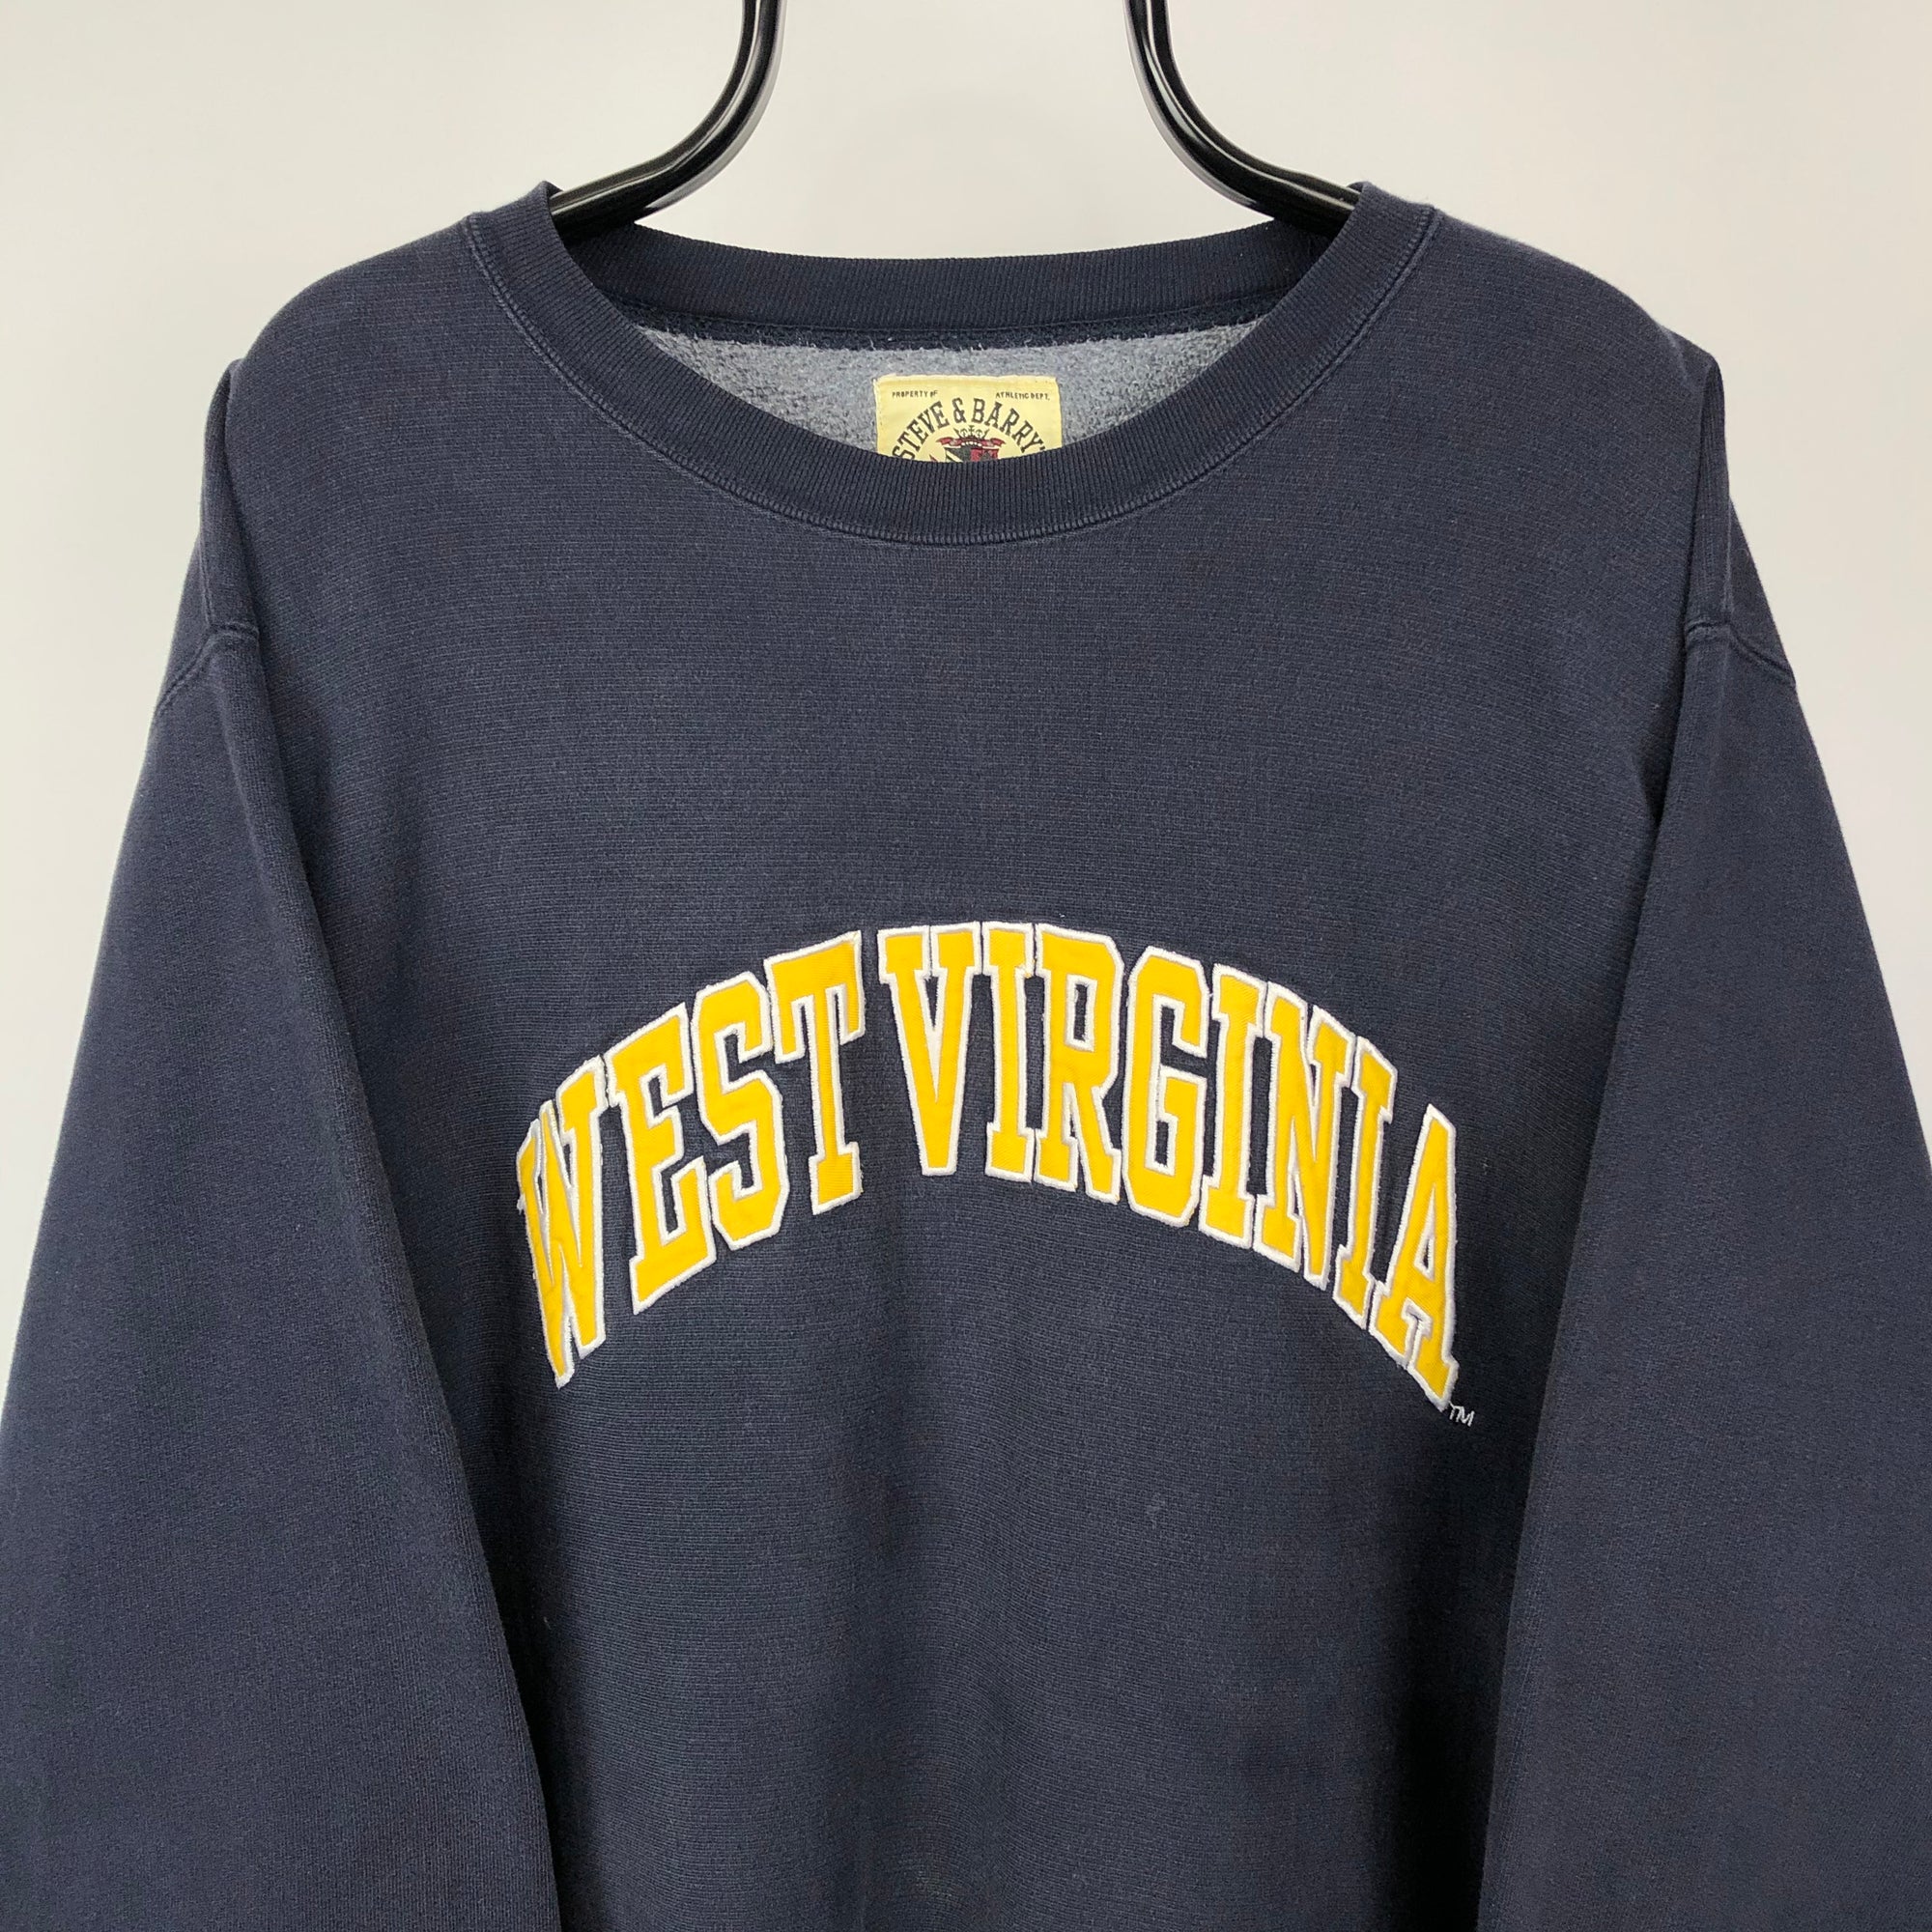 Vintage West Virginia Heavyweight Sweatshirt - Men's XL/Women's XXL